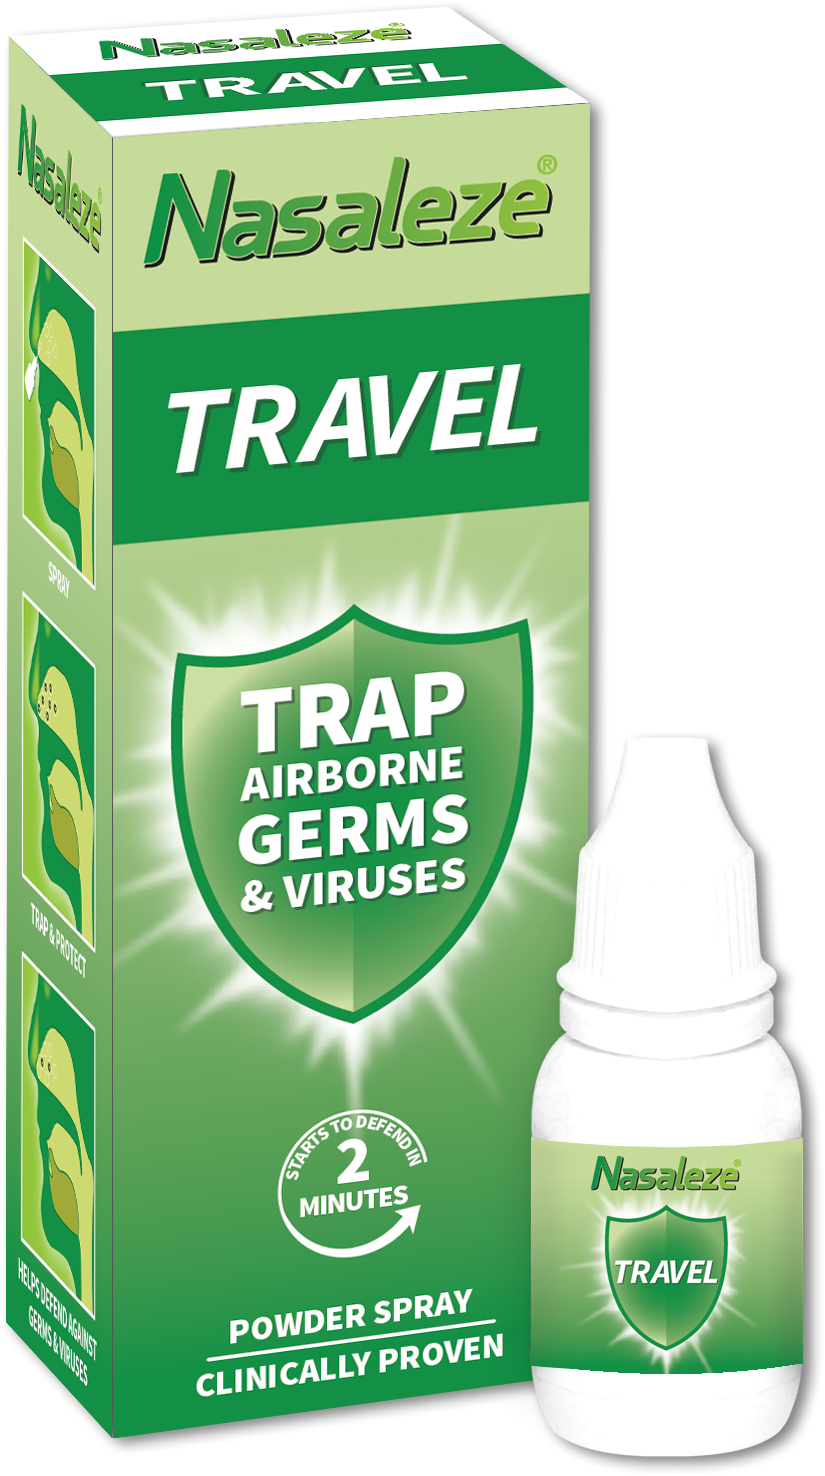 Nasaleze Travel - Germ and Virus Prevention